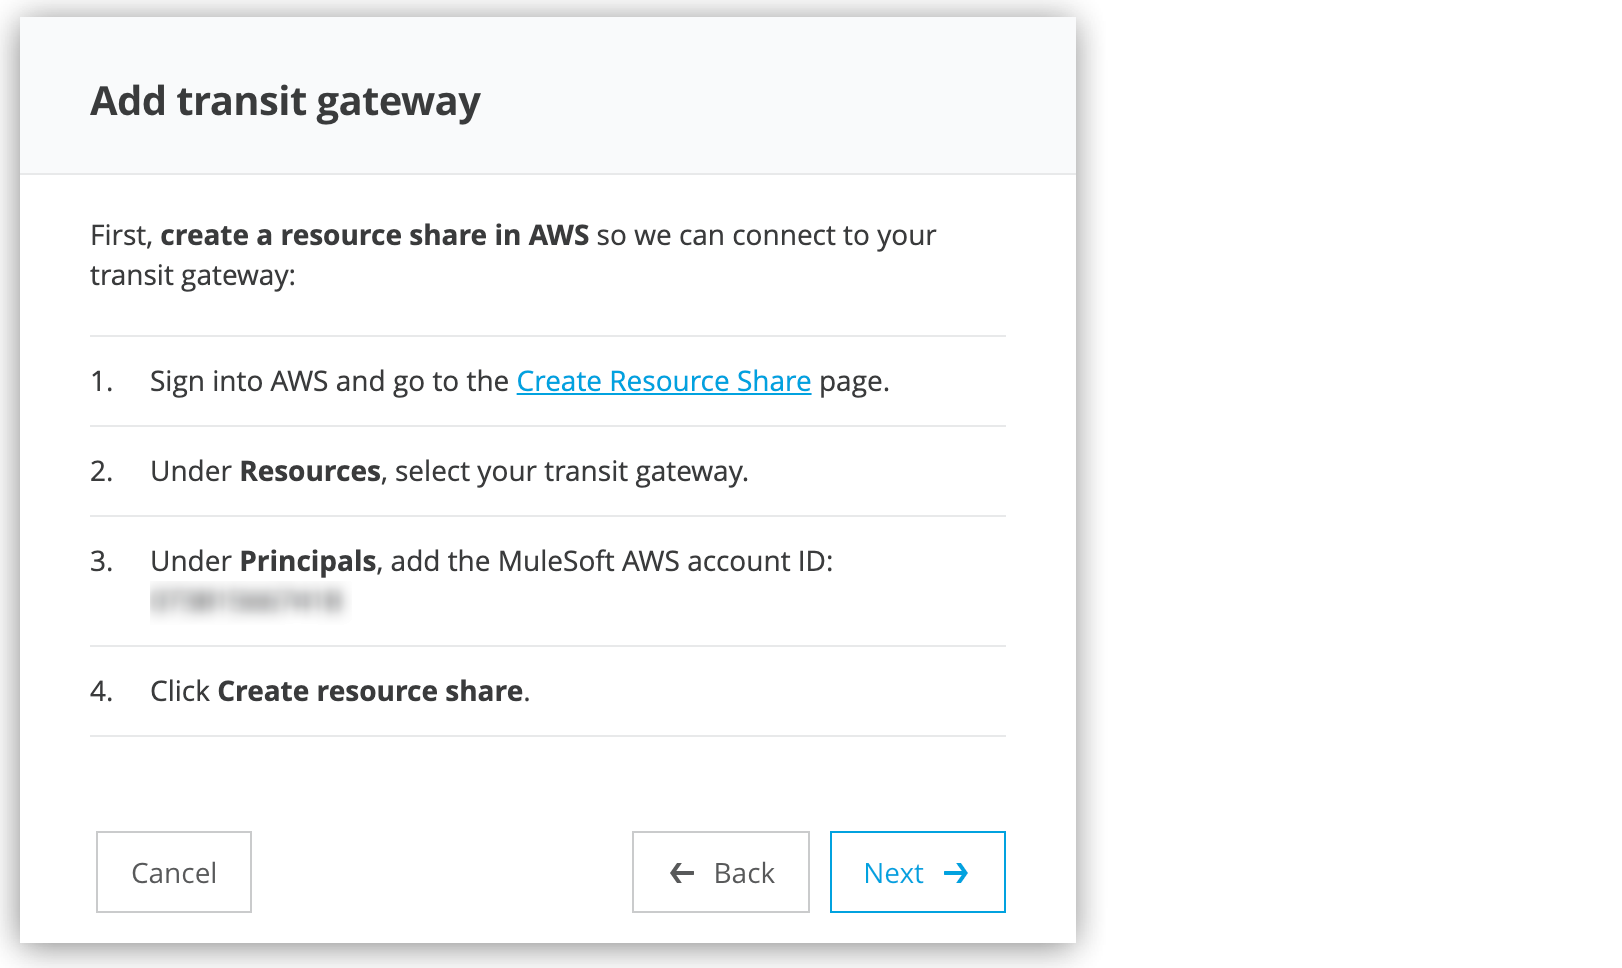 Add transit gateway page: Steps to create a resource share